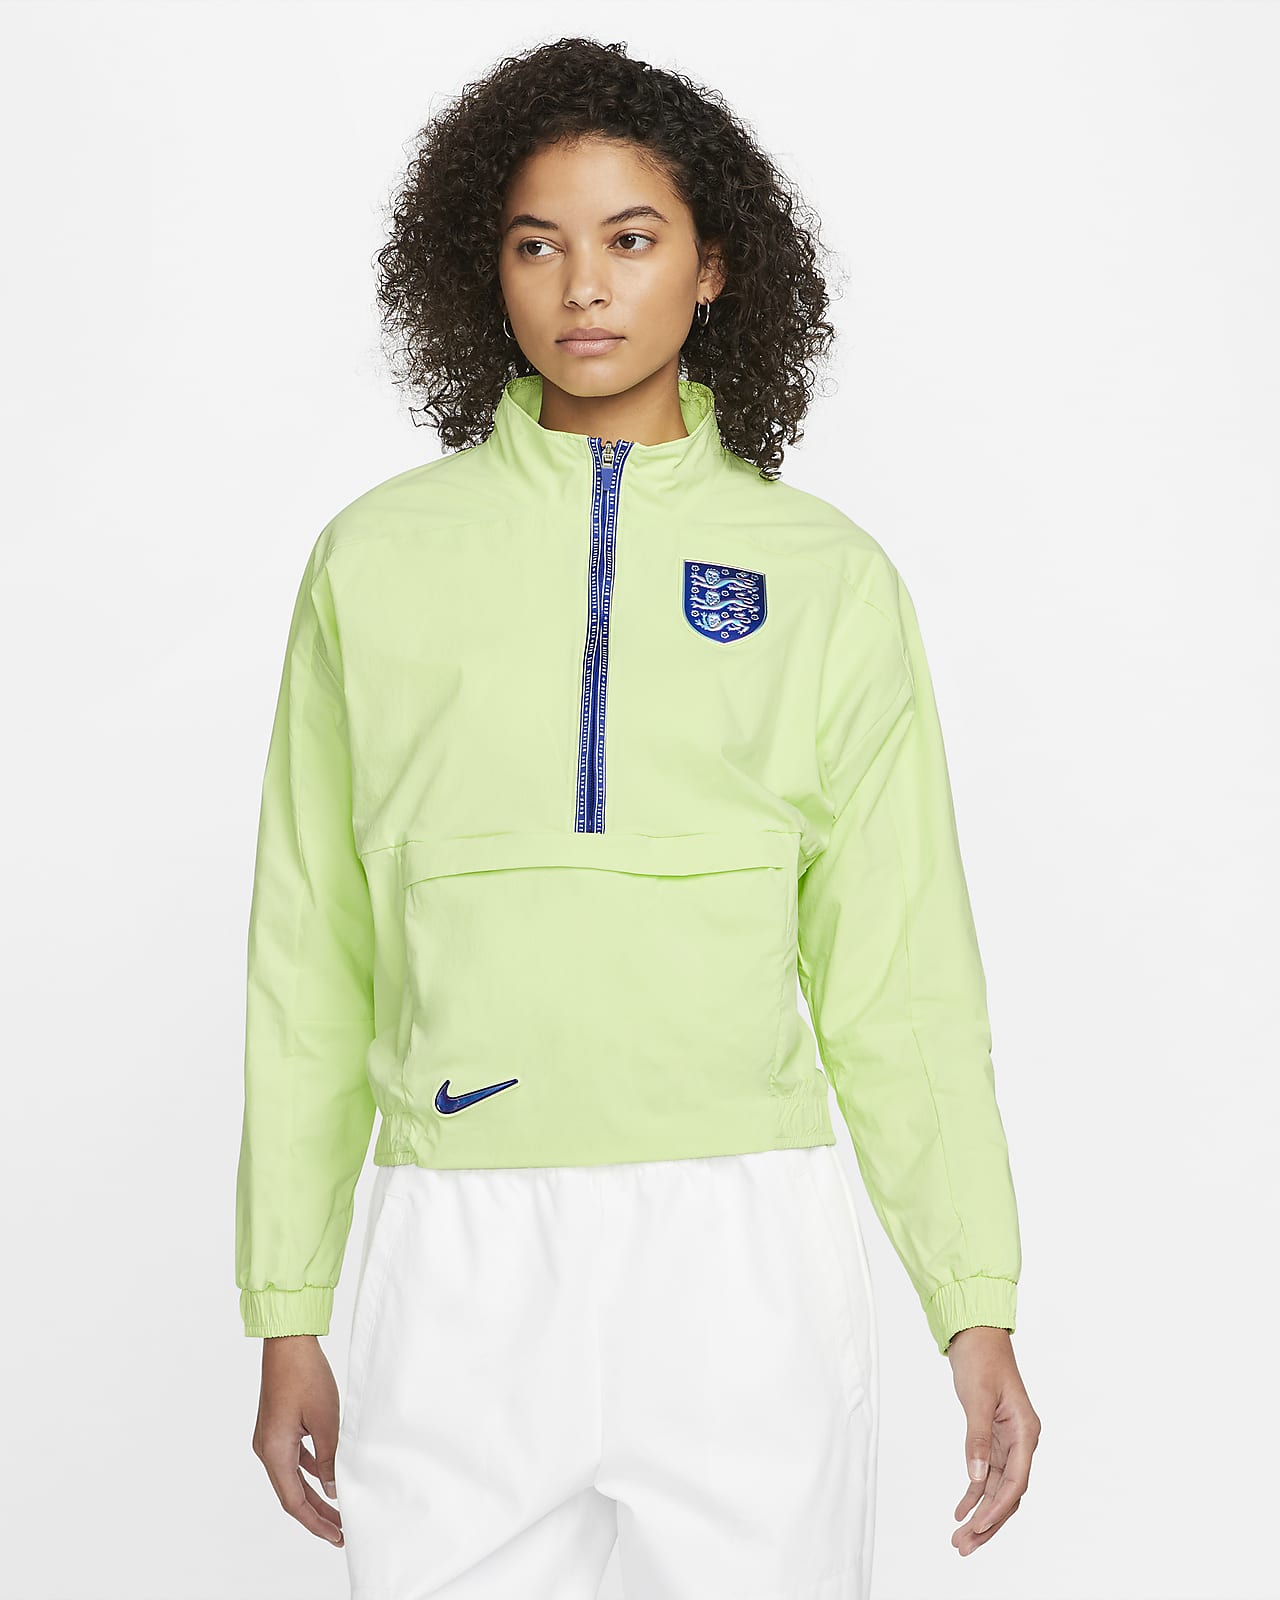 England Women's 1/4-Zip Football Jacket